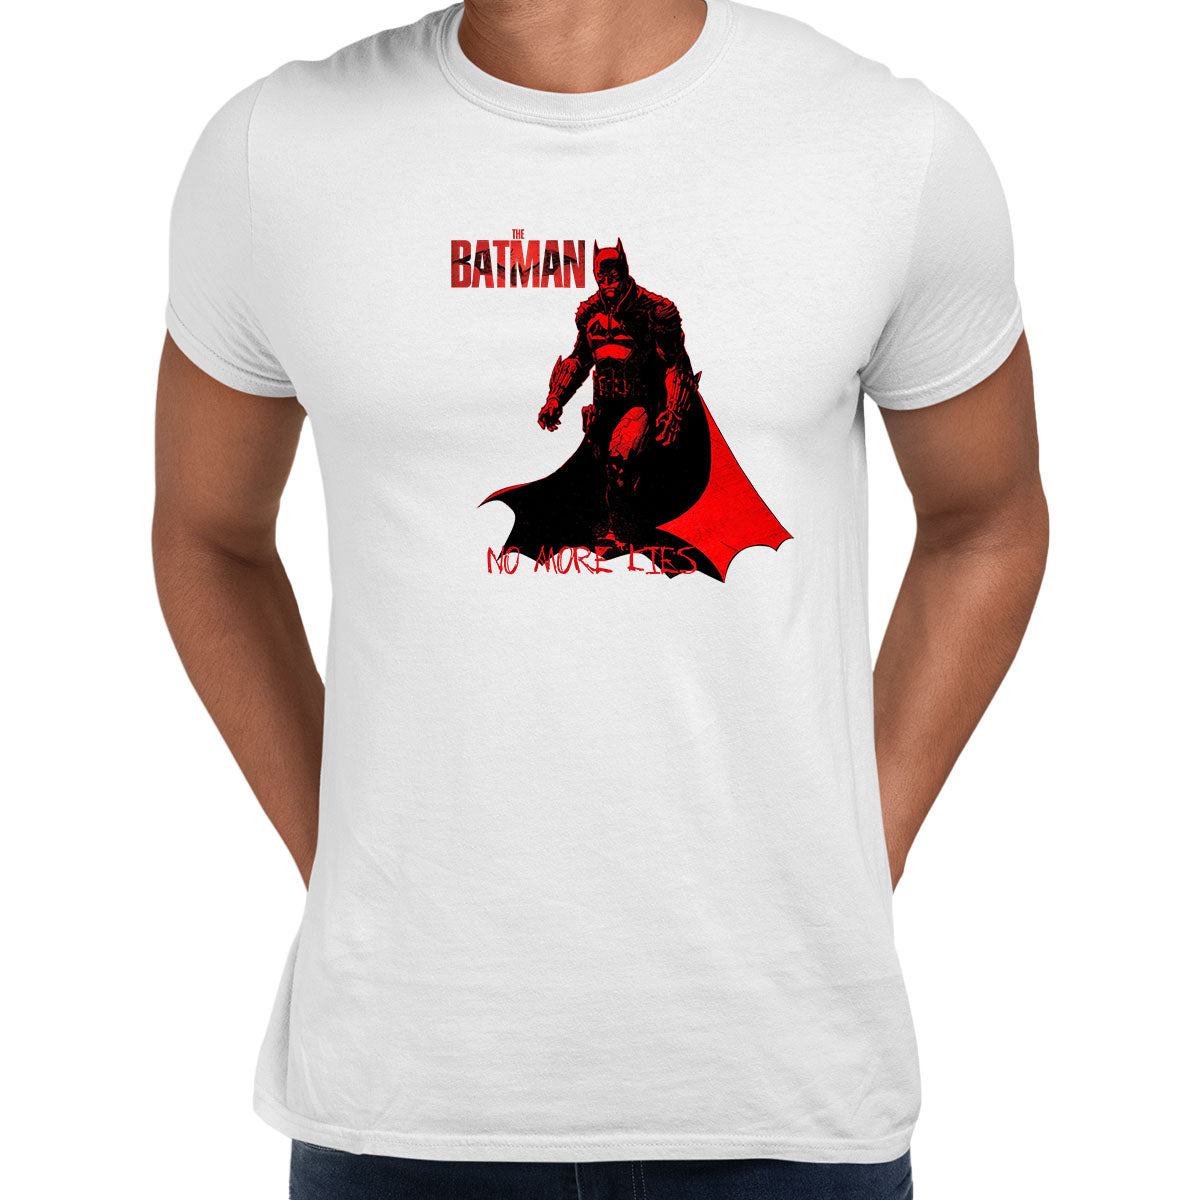 The Batman Superheroes DC Movie T-shirt Adult Unoisex Riddler - Kuzi Tees